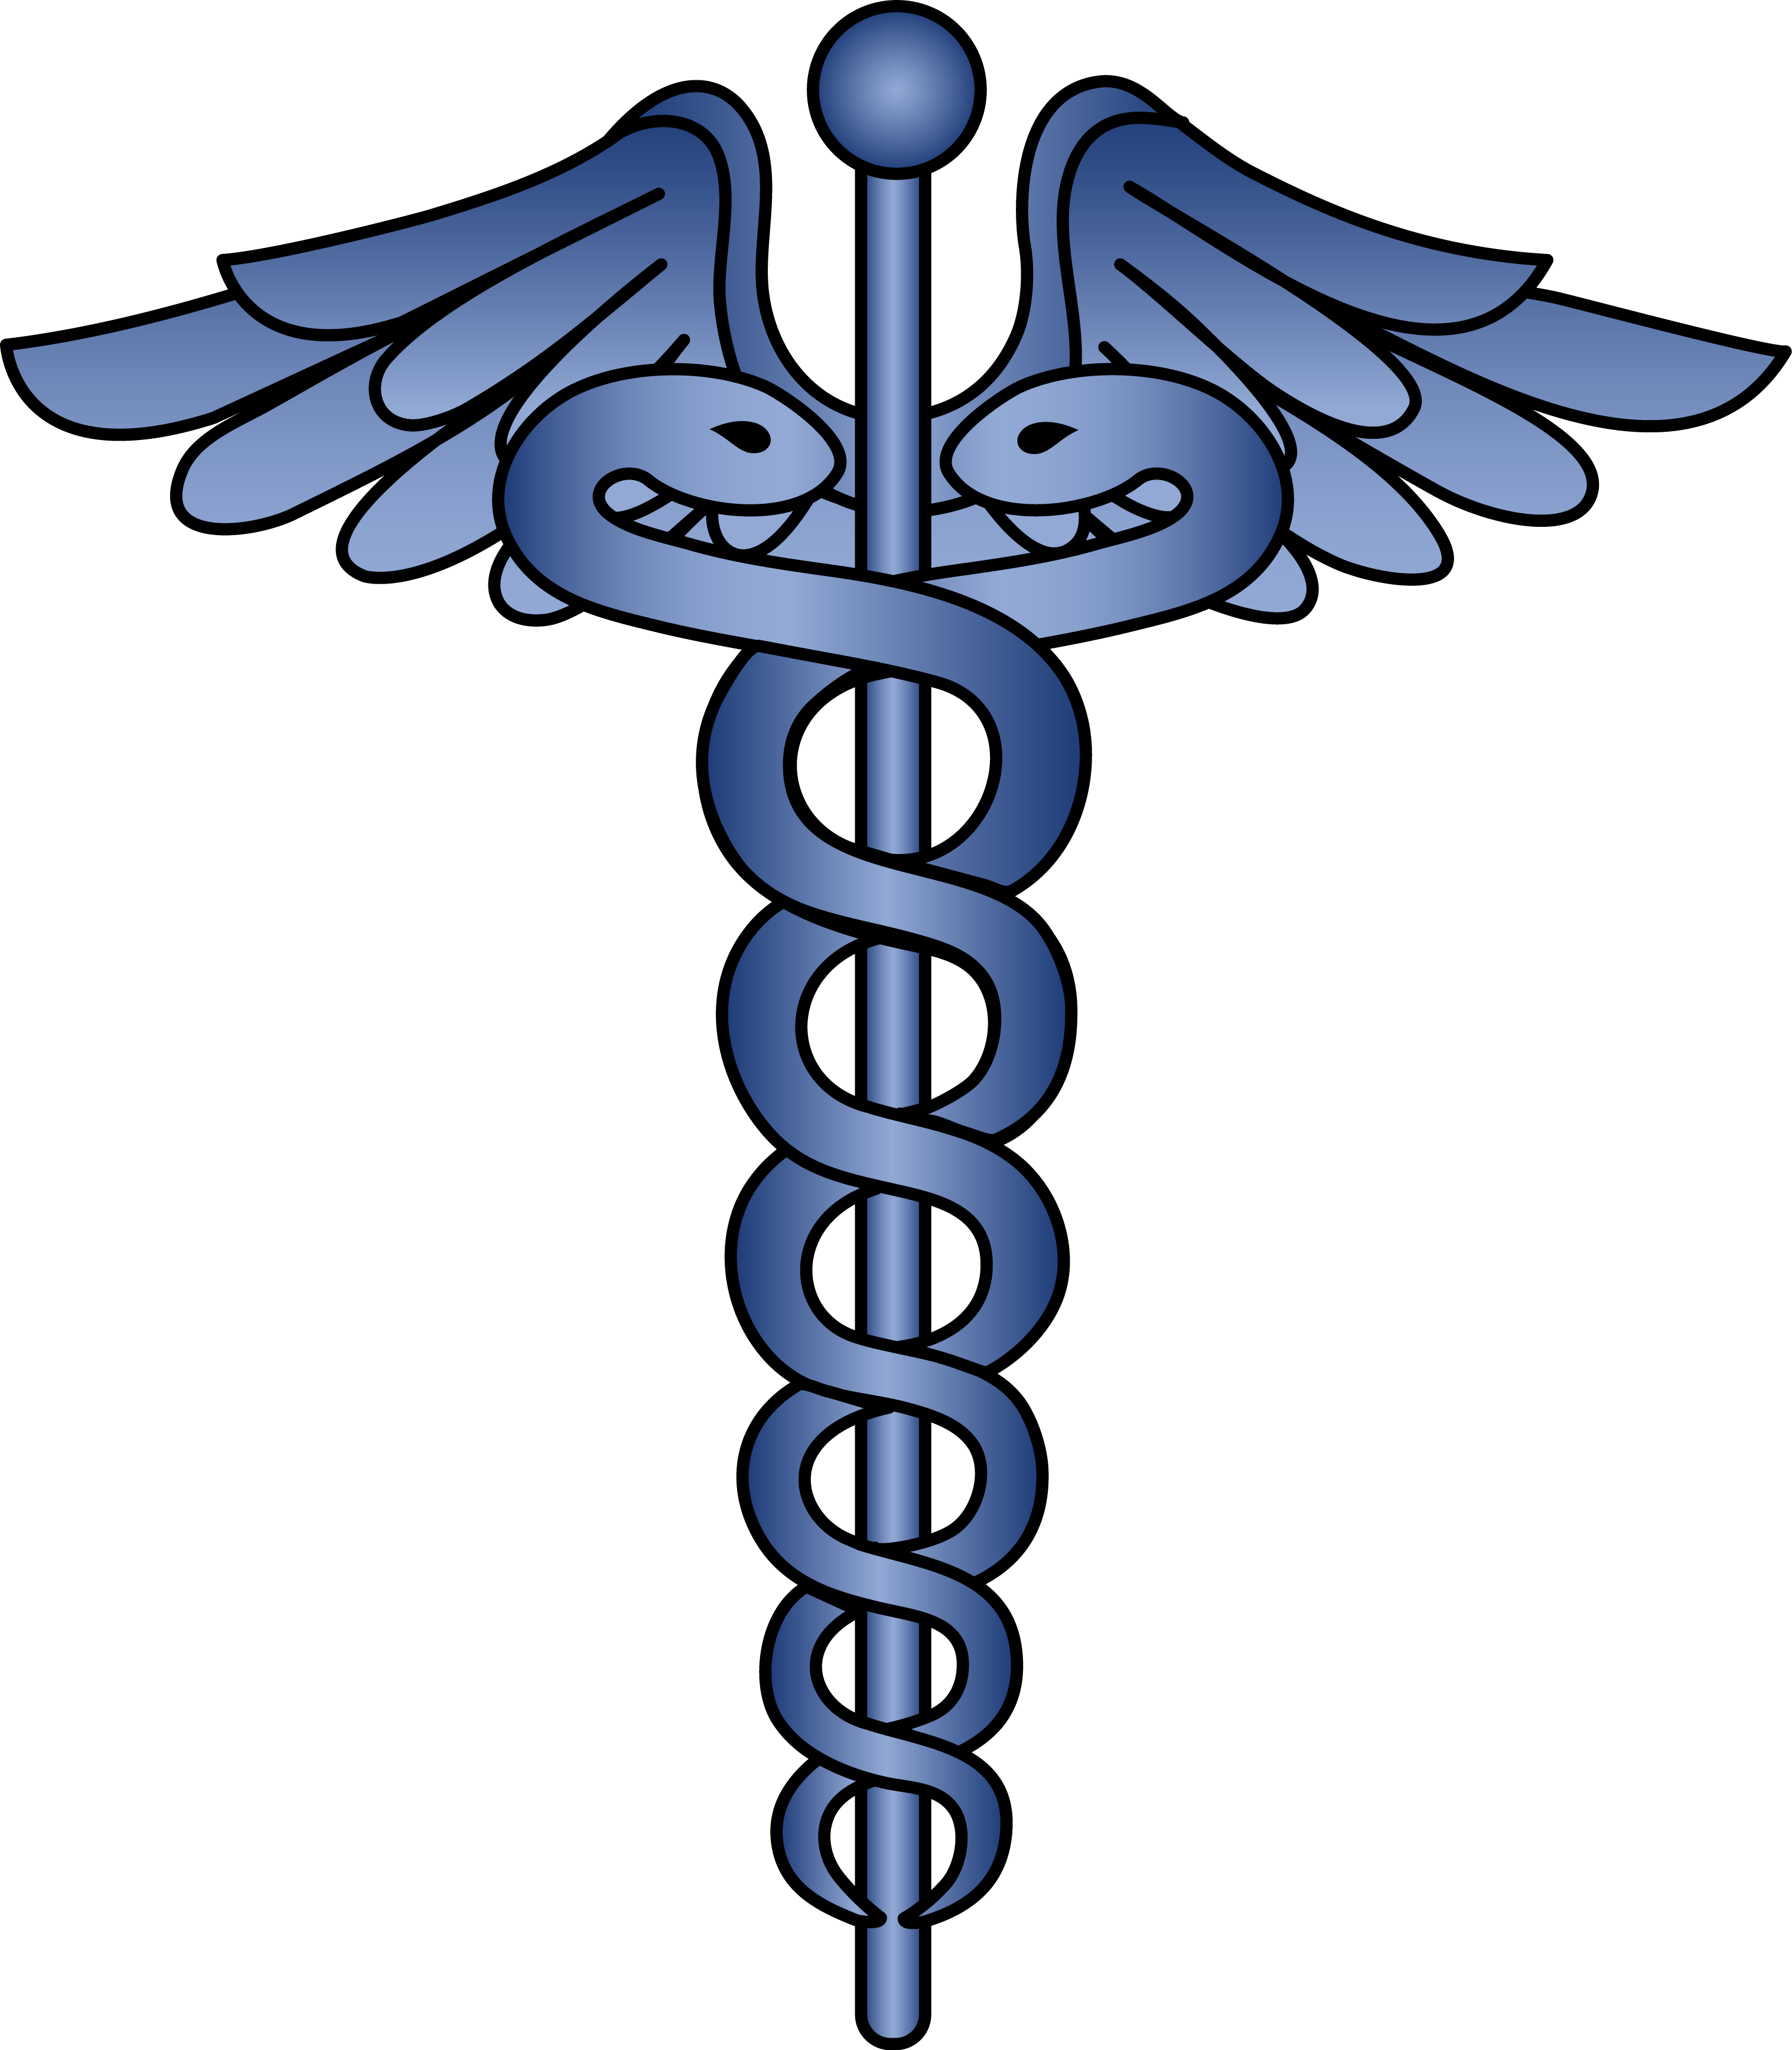 doctor logo images